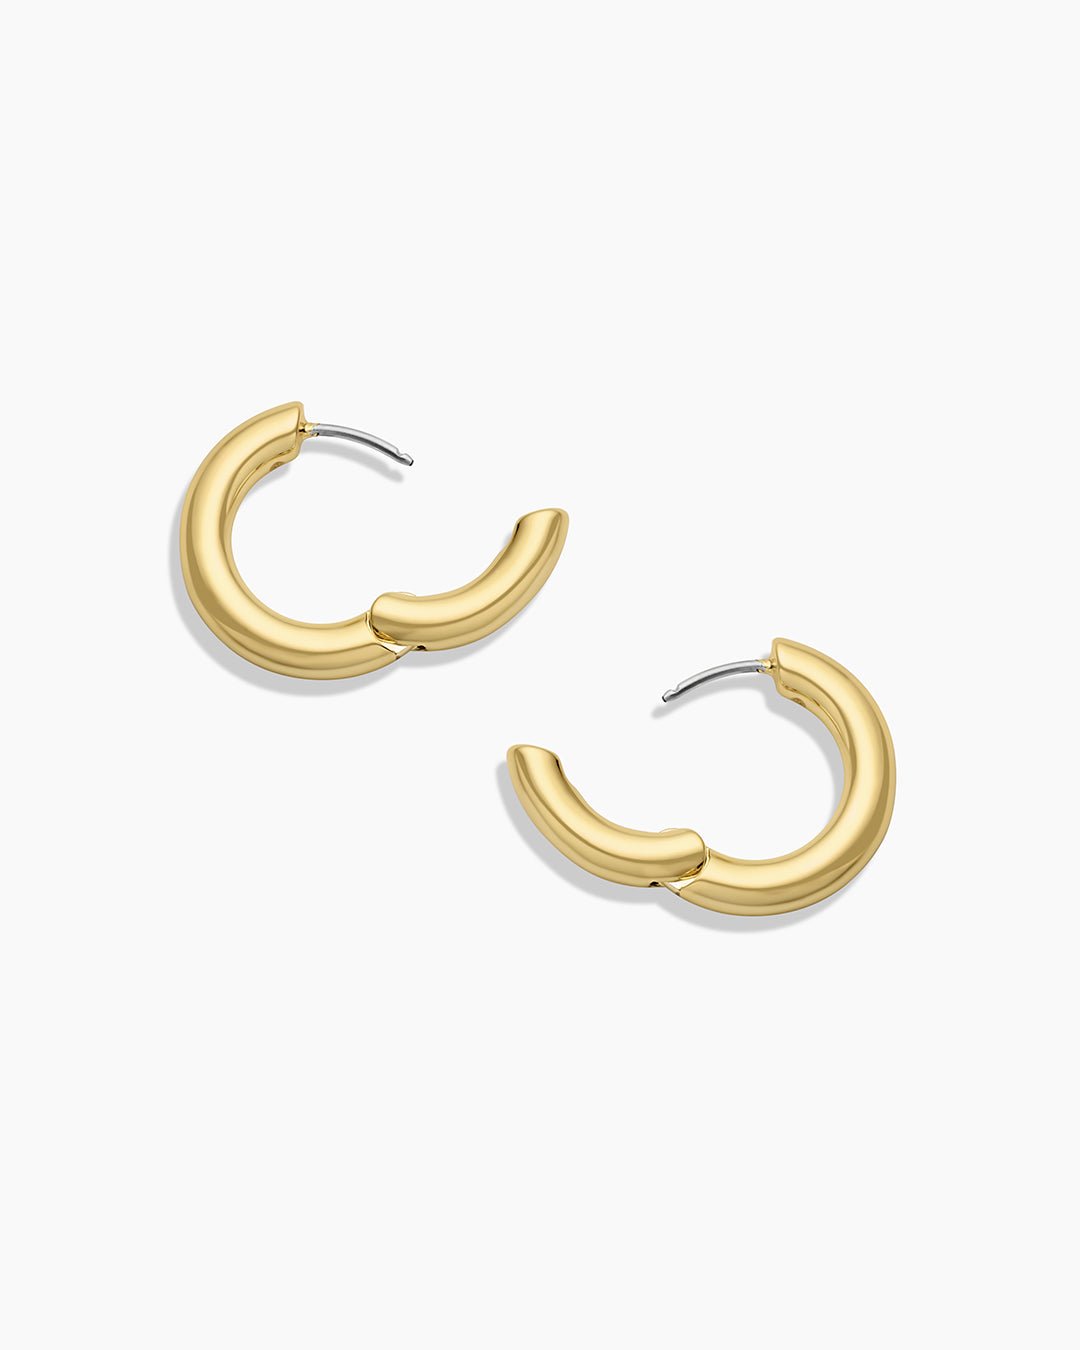 Lou Hoops chunky hoops bold hoop earrings || option::Gold Plated